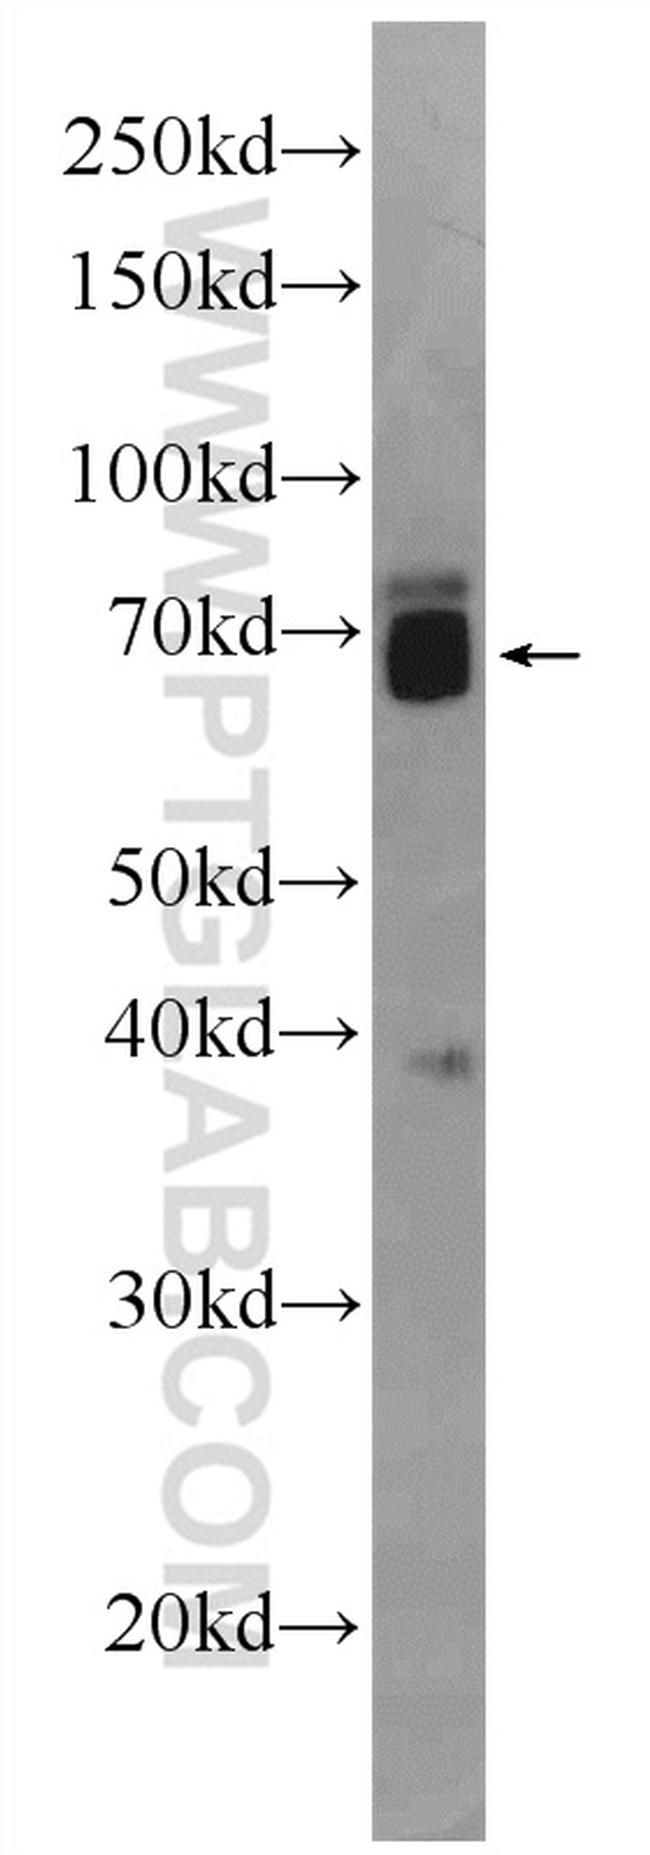 ZNF143 Antibody in Western Blot (WB)